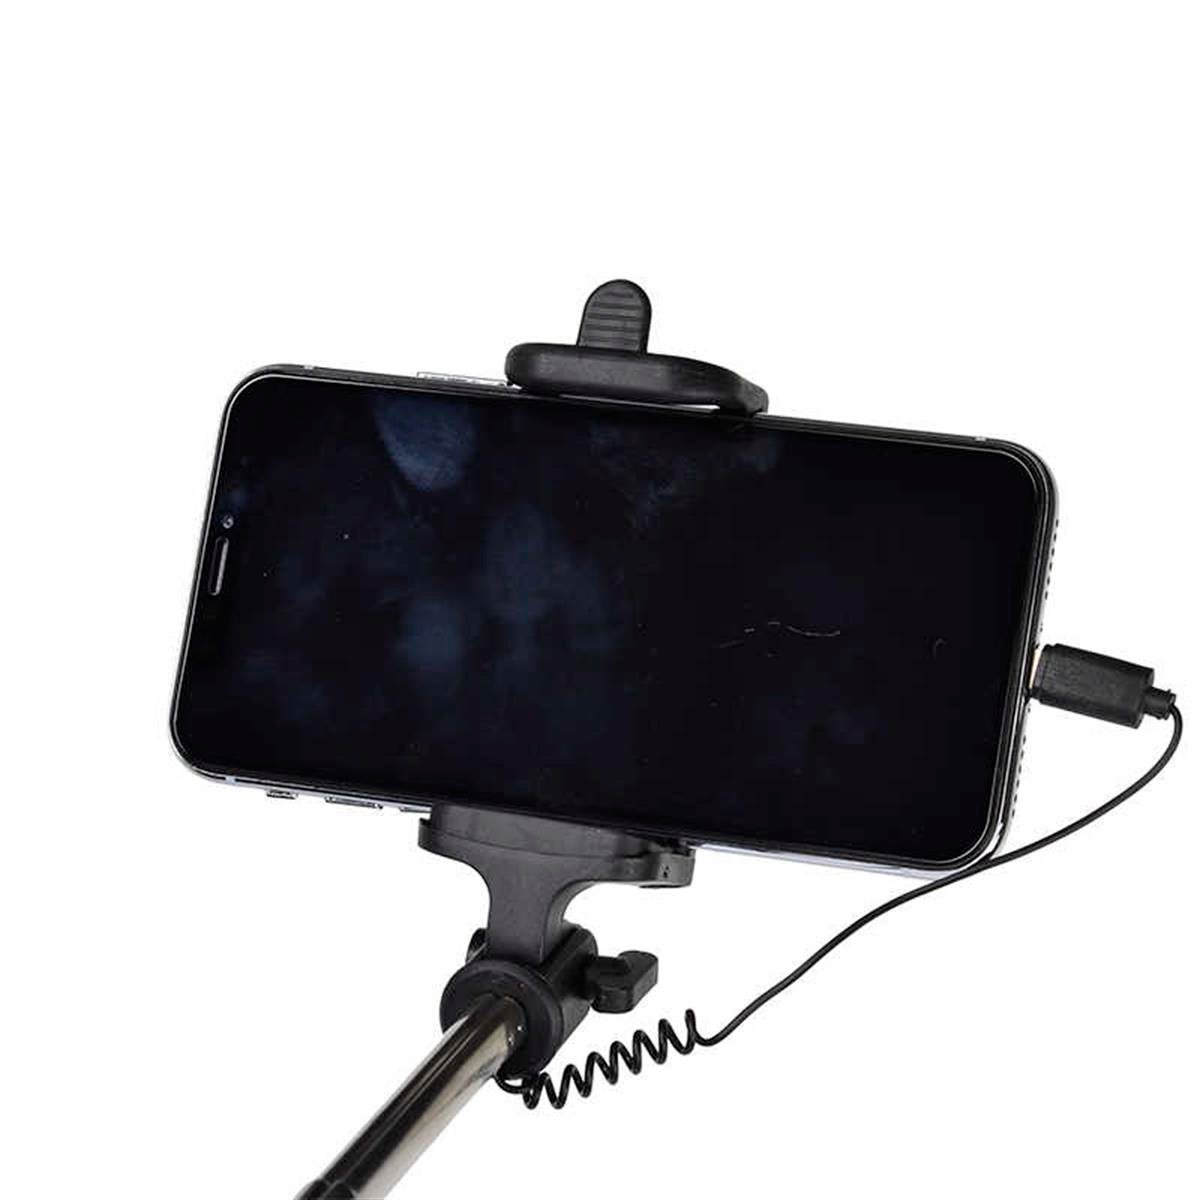 Apple iPhone 7 özel Selfie Çubuğu H520 | Mobicaps